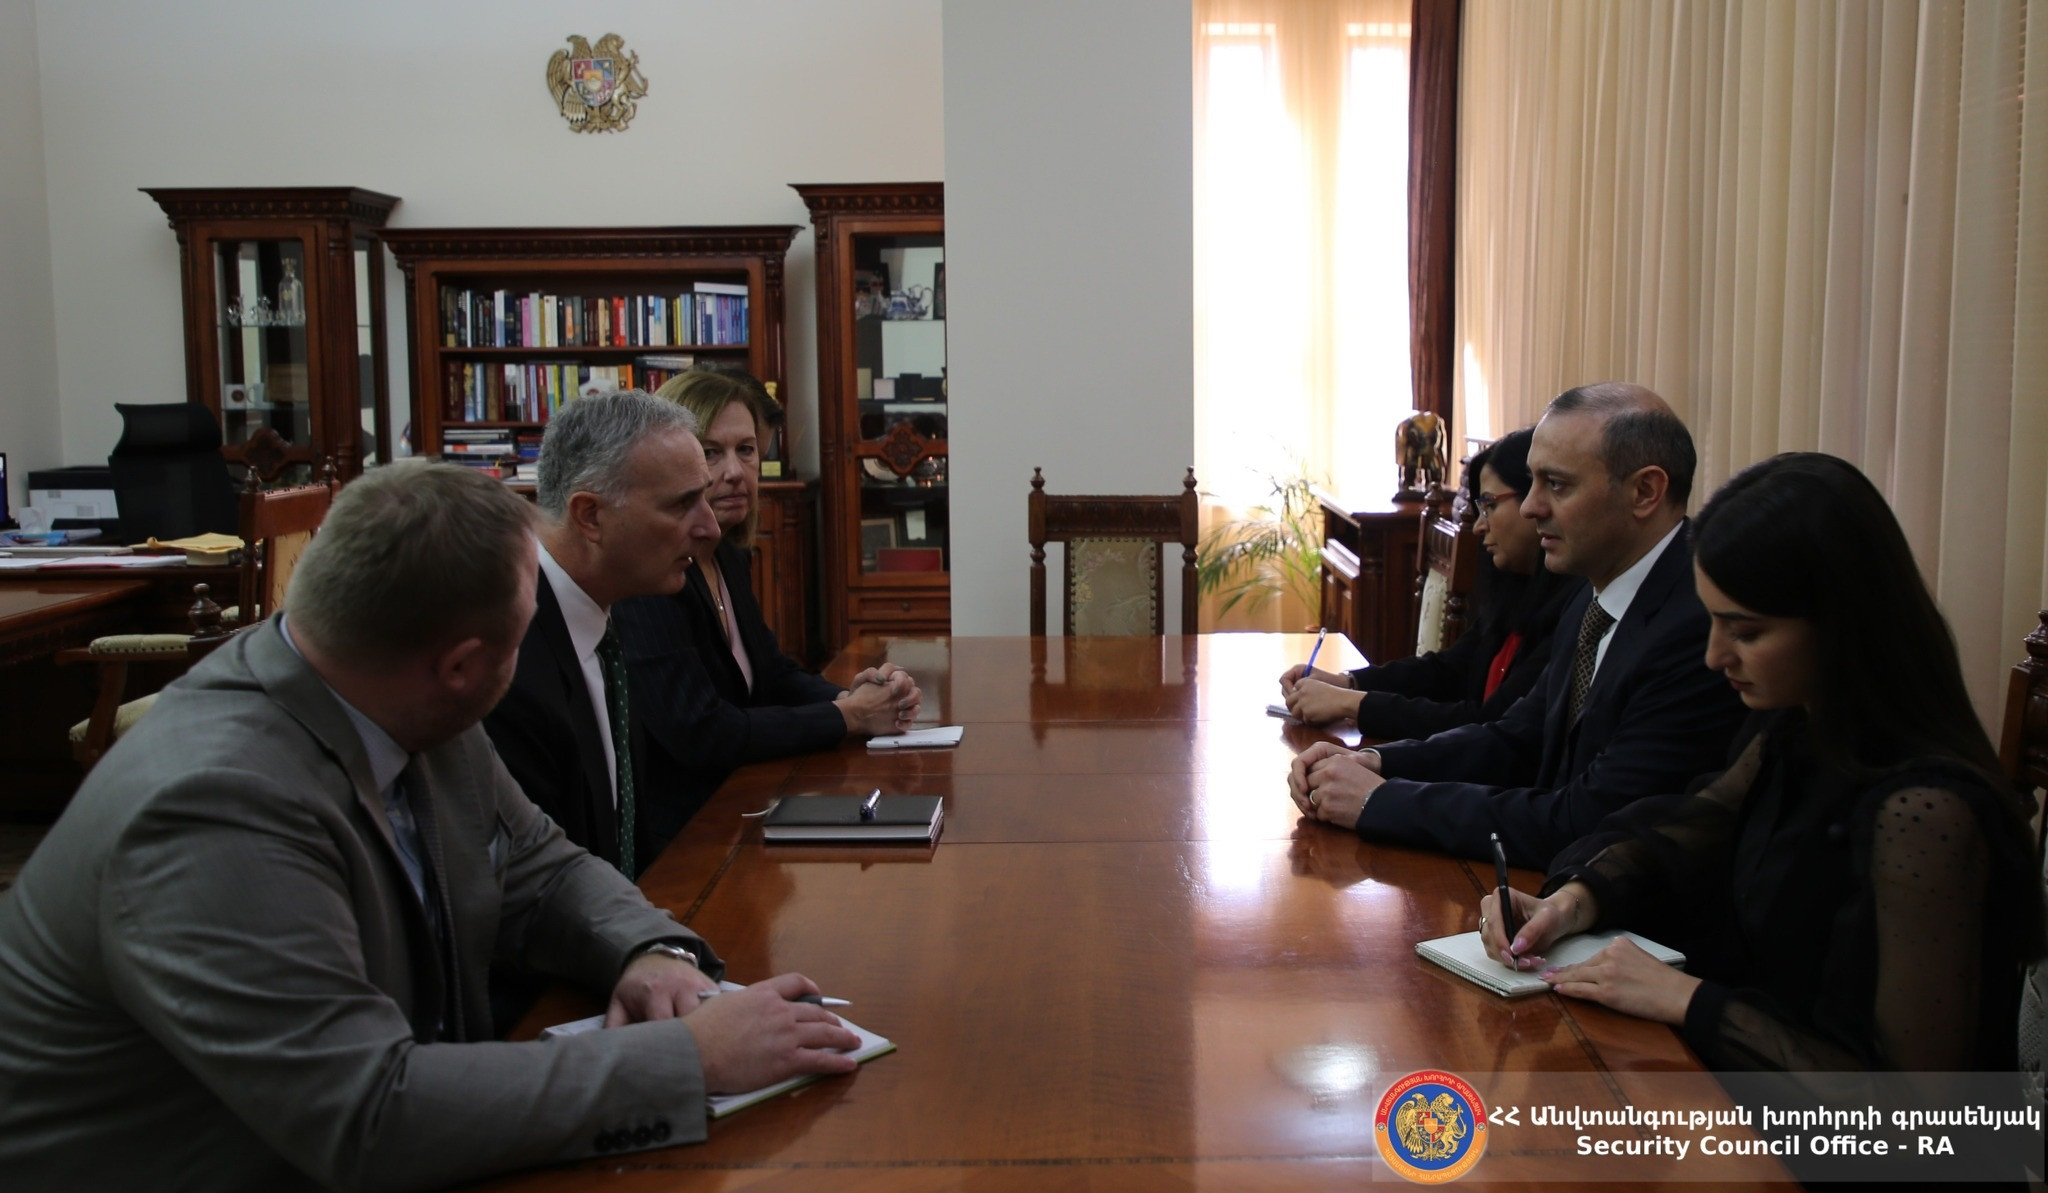 Armen Grigoryan and Louis Bono discussed process of normalizing Armenia-Azerbaijan relations